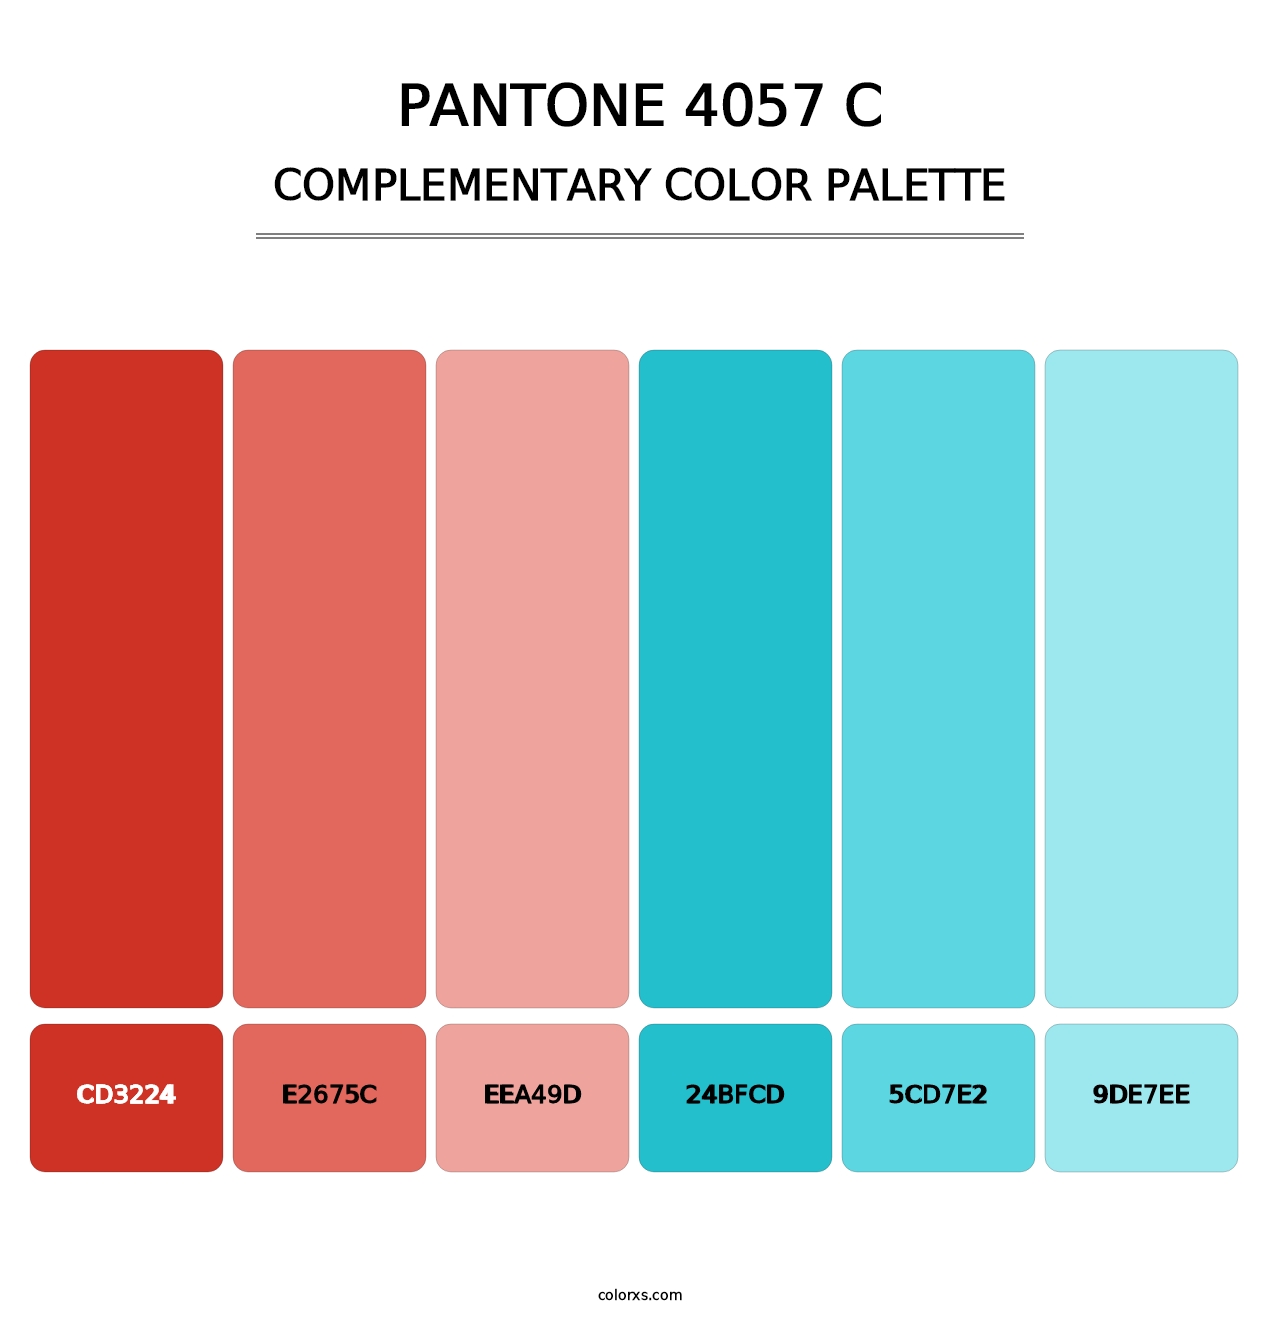 PANTONE 4057 C - Complementary Color Palette